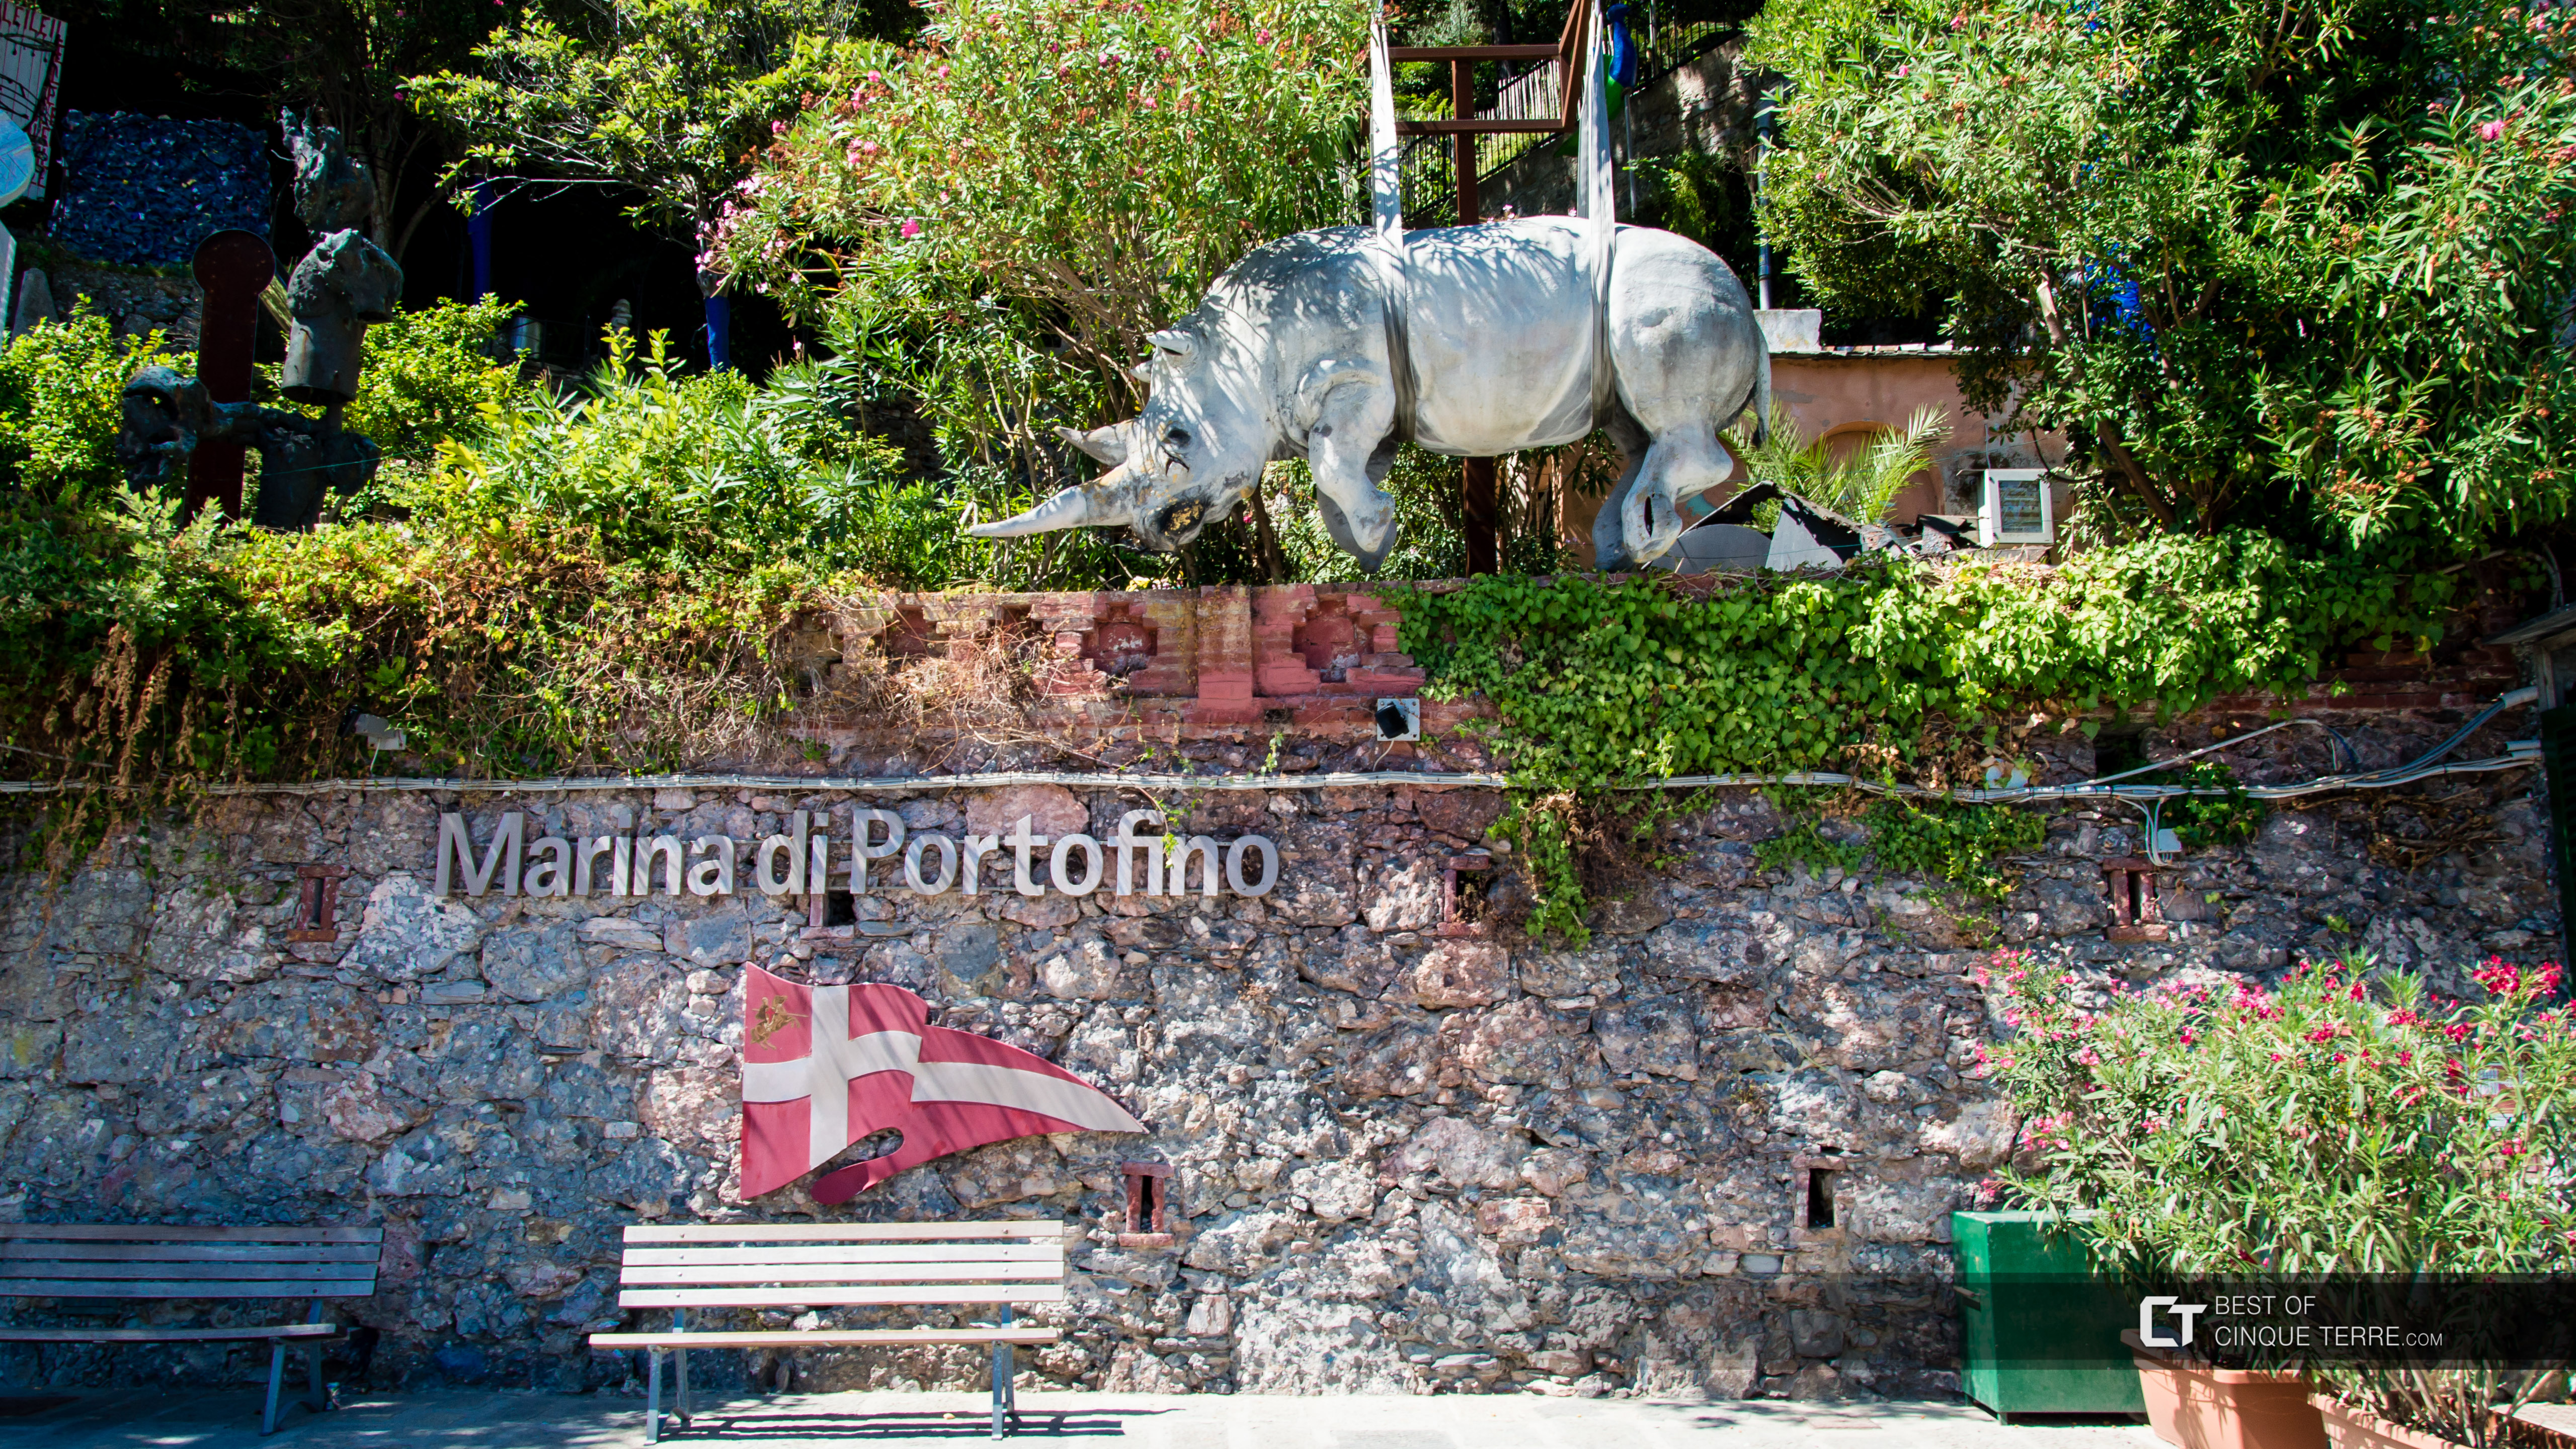 Statue de rhinocéros, le symbole de la ville., Portofino, Italie